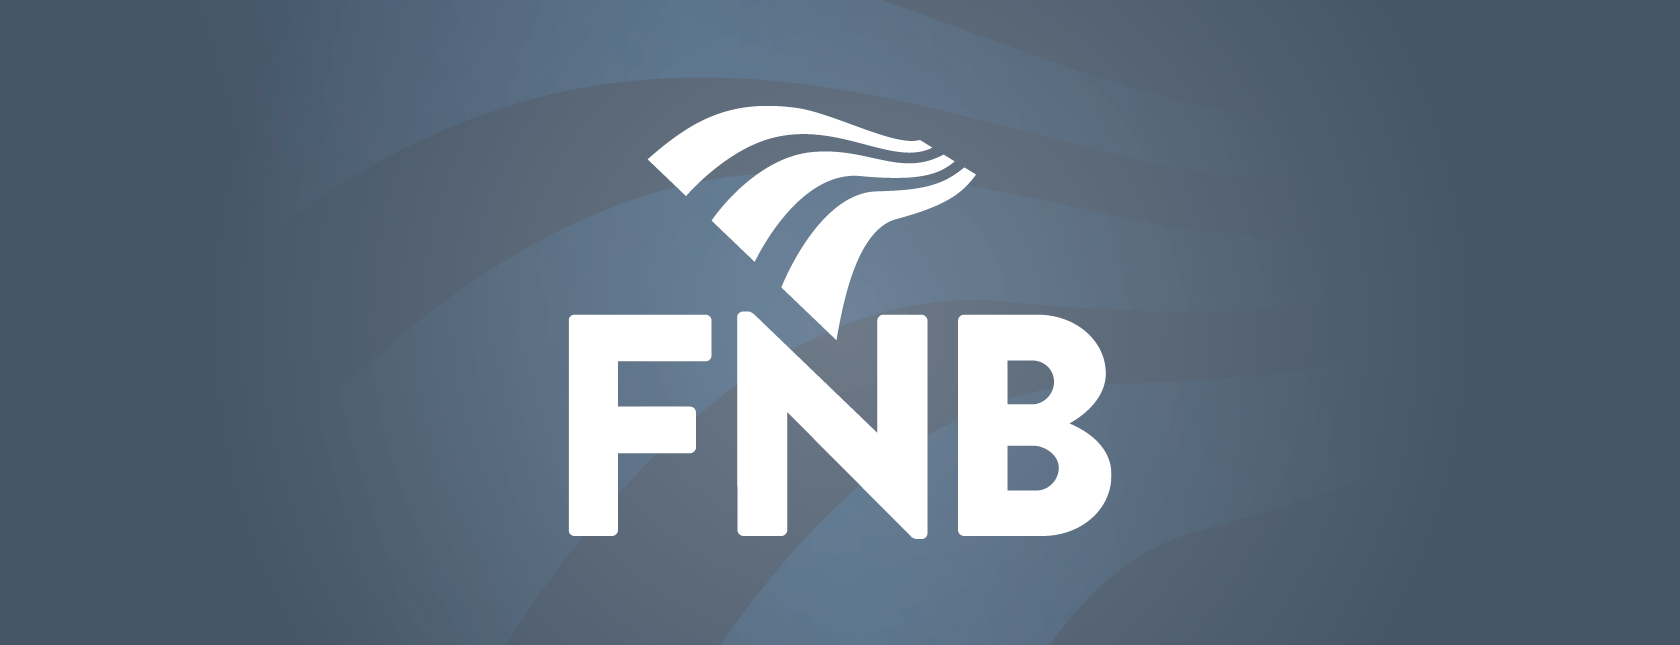 FNB Bank